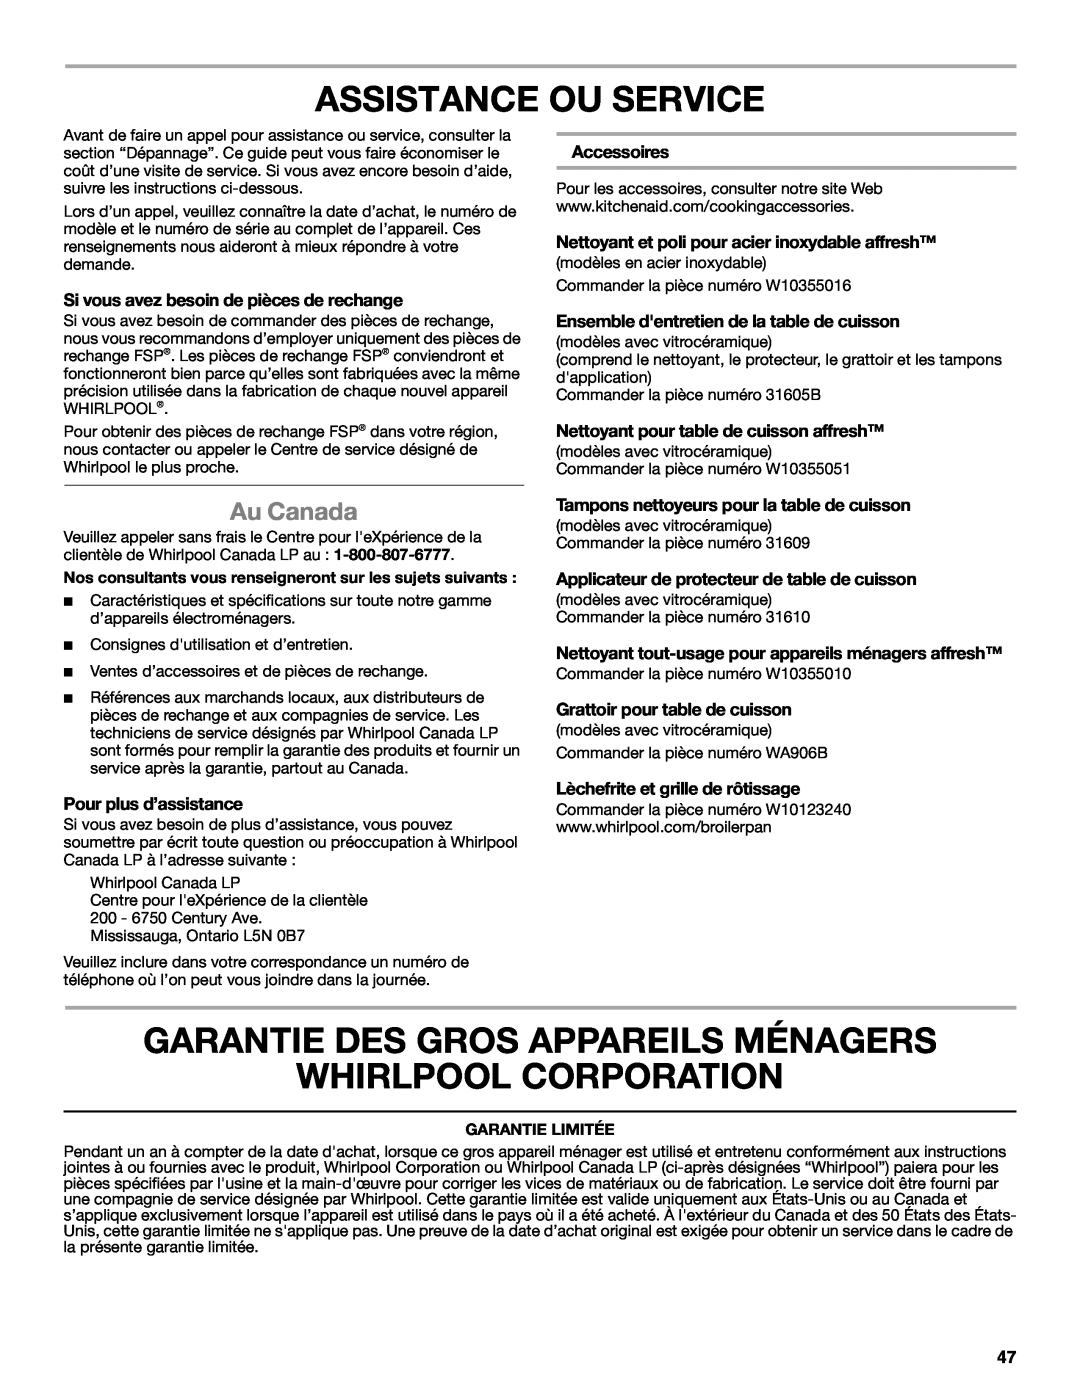 Whirlpool GGG390LXS manual Assistance Ou Service, Garantie Des Gros Appareils Ménagers Whirlpool Corporation, Au Canada 